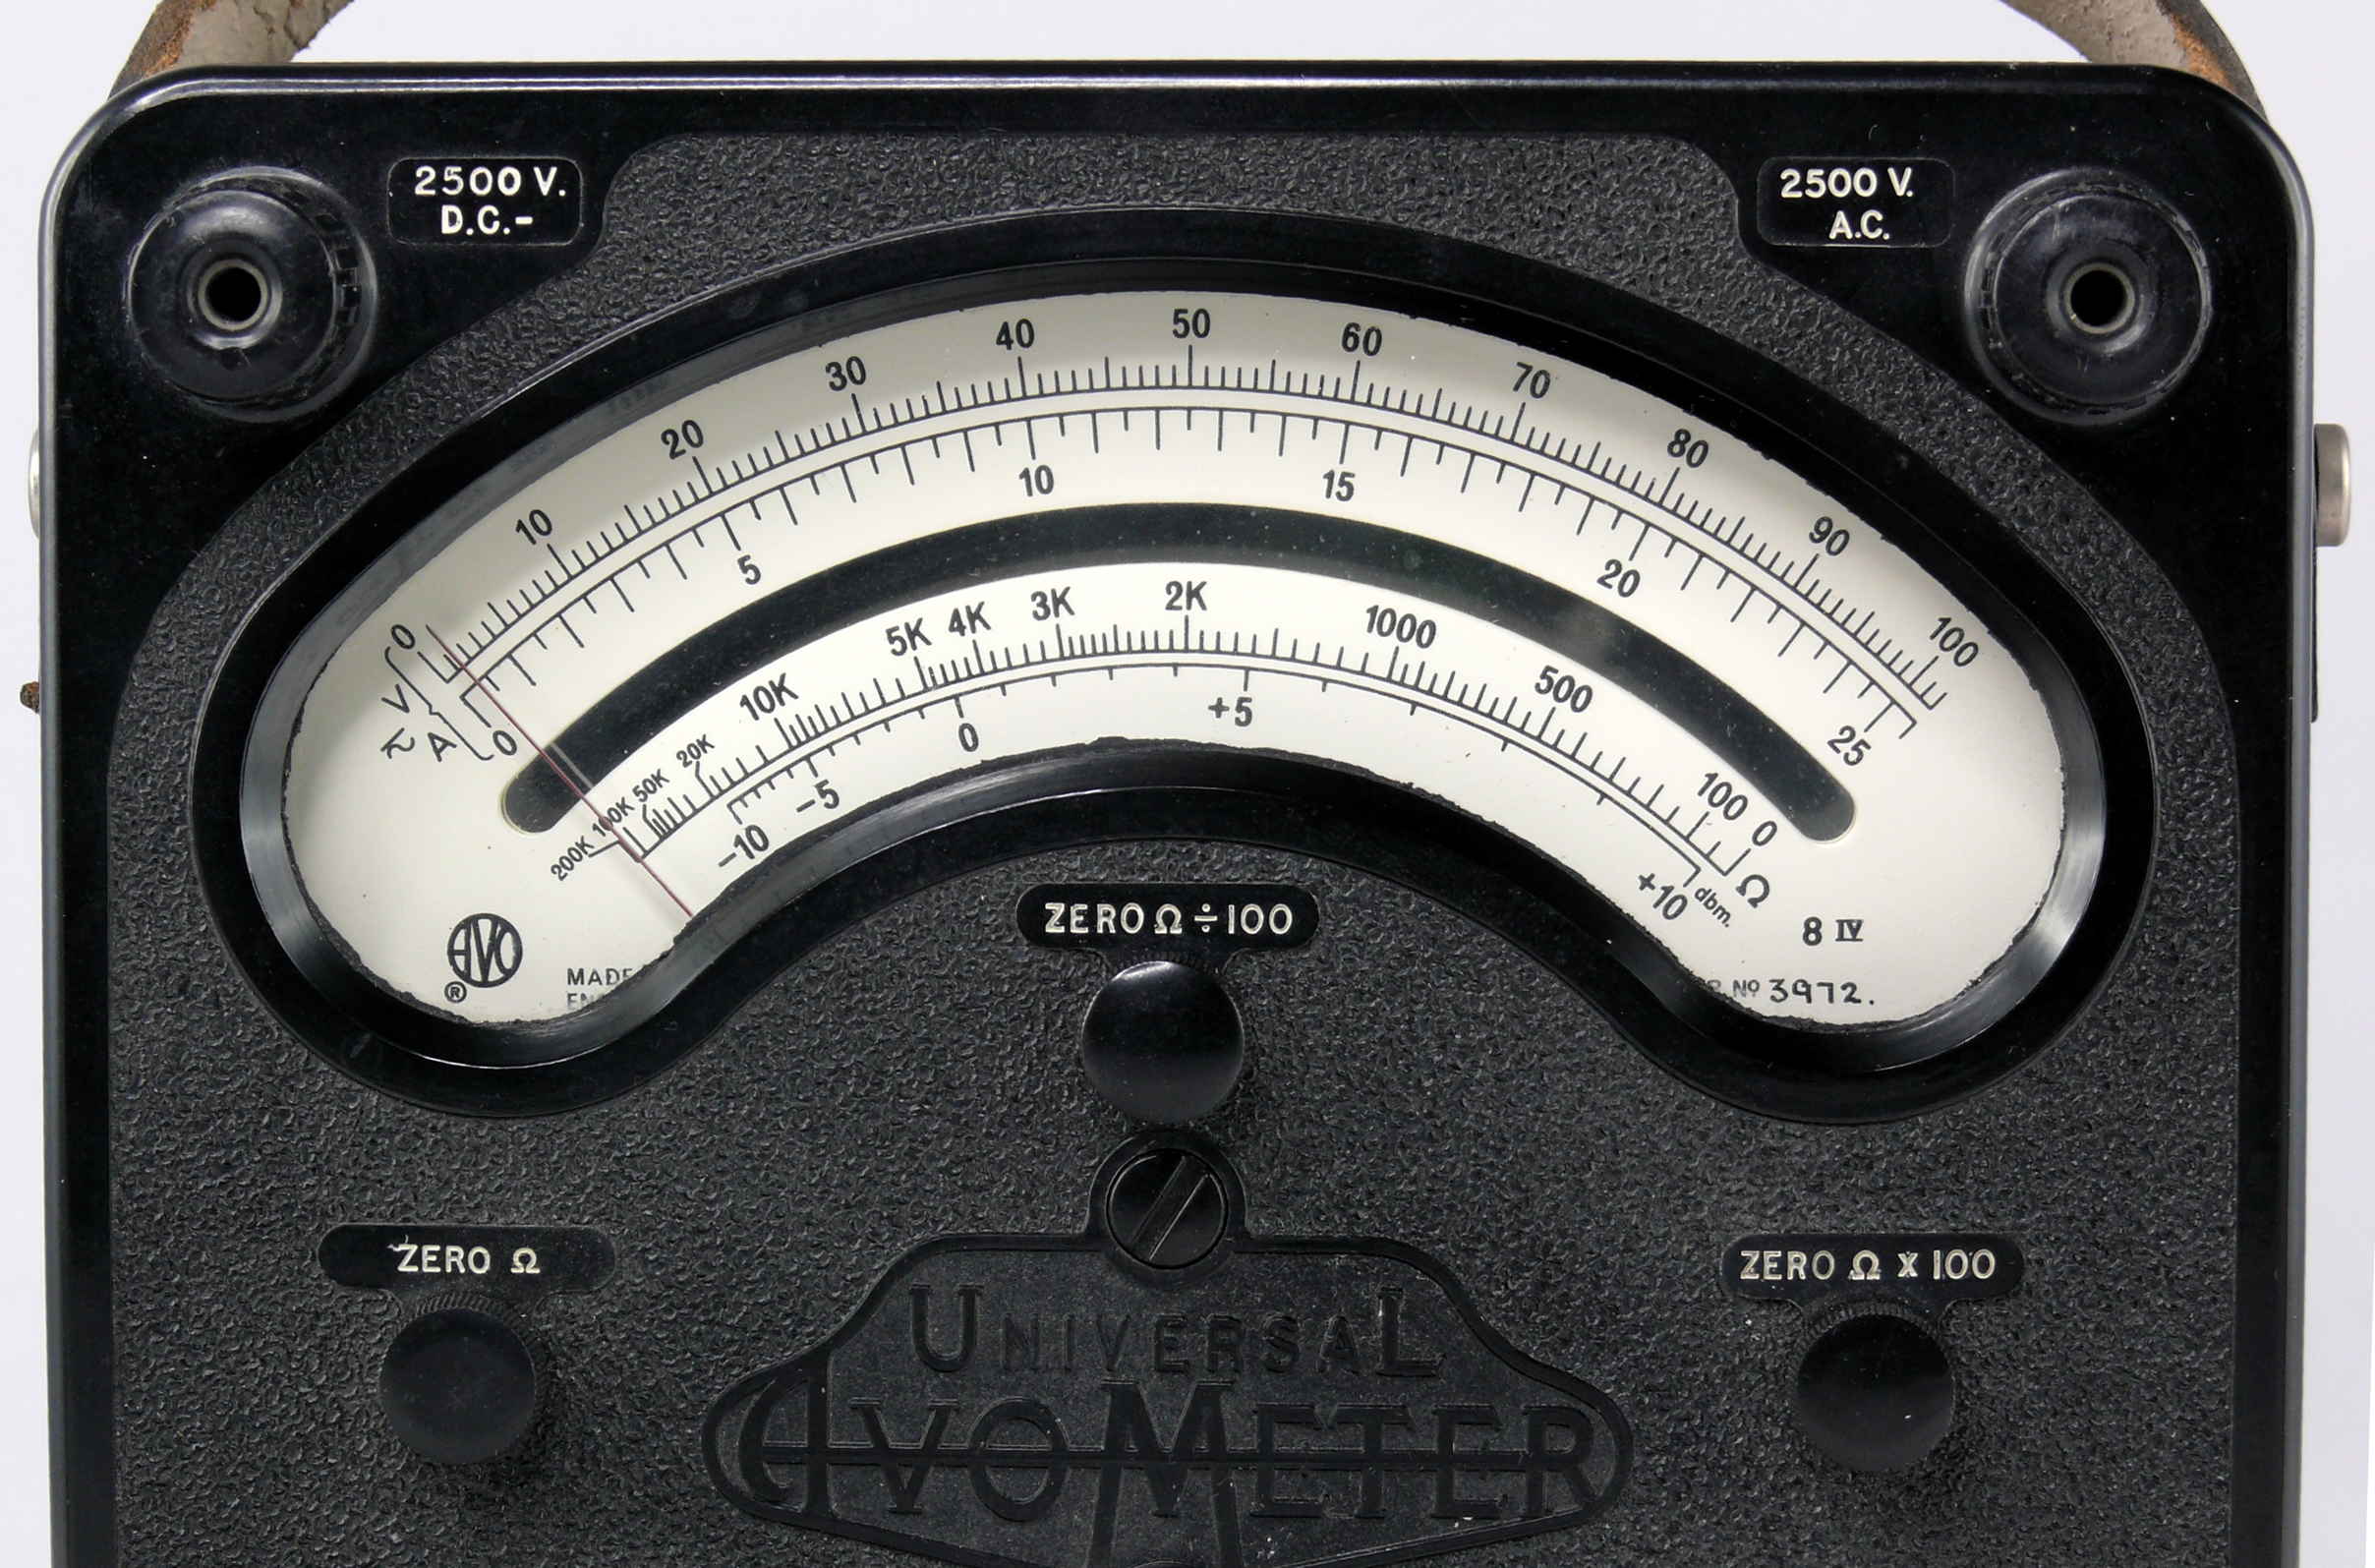 Multimètres analogiques
(“AVOMETER Model 8”)